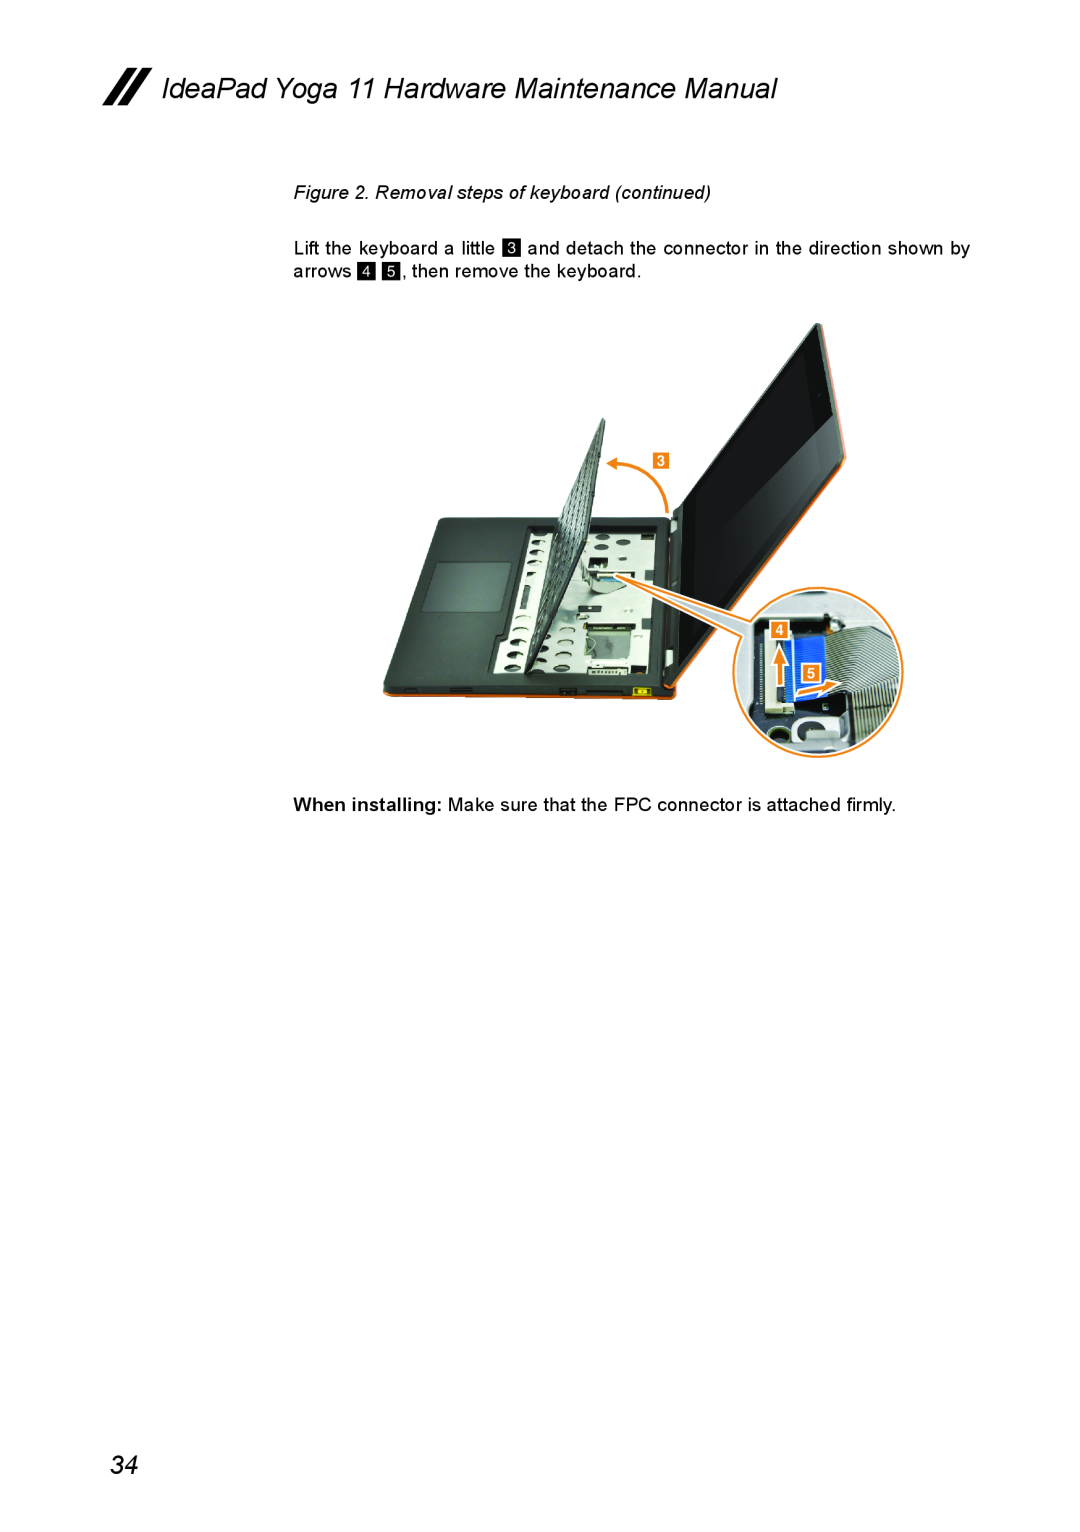 Lenovo manual Removal steps of keyboard continued, IdeaPad Yoga 11 Hardware Maintenance Manual 